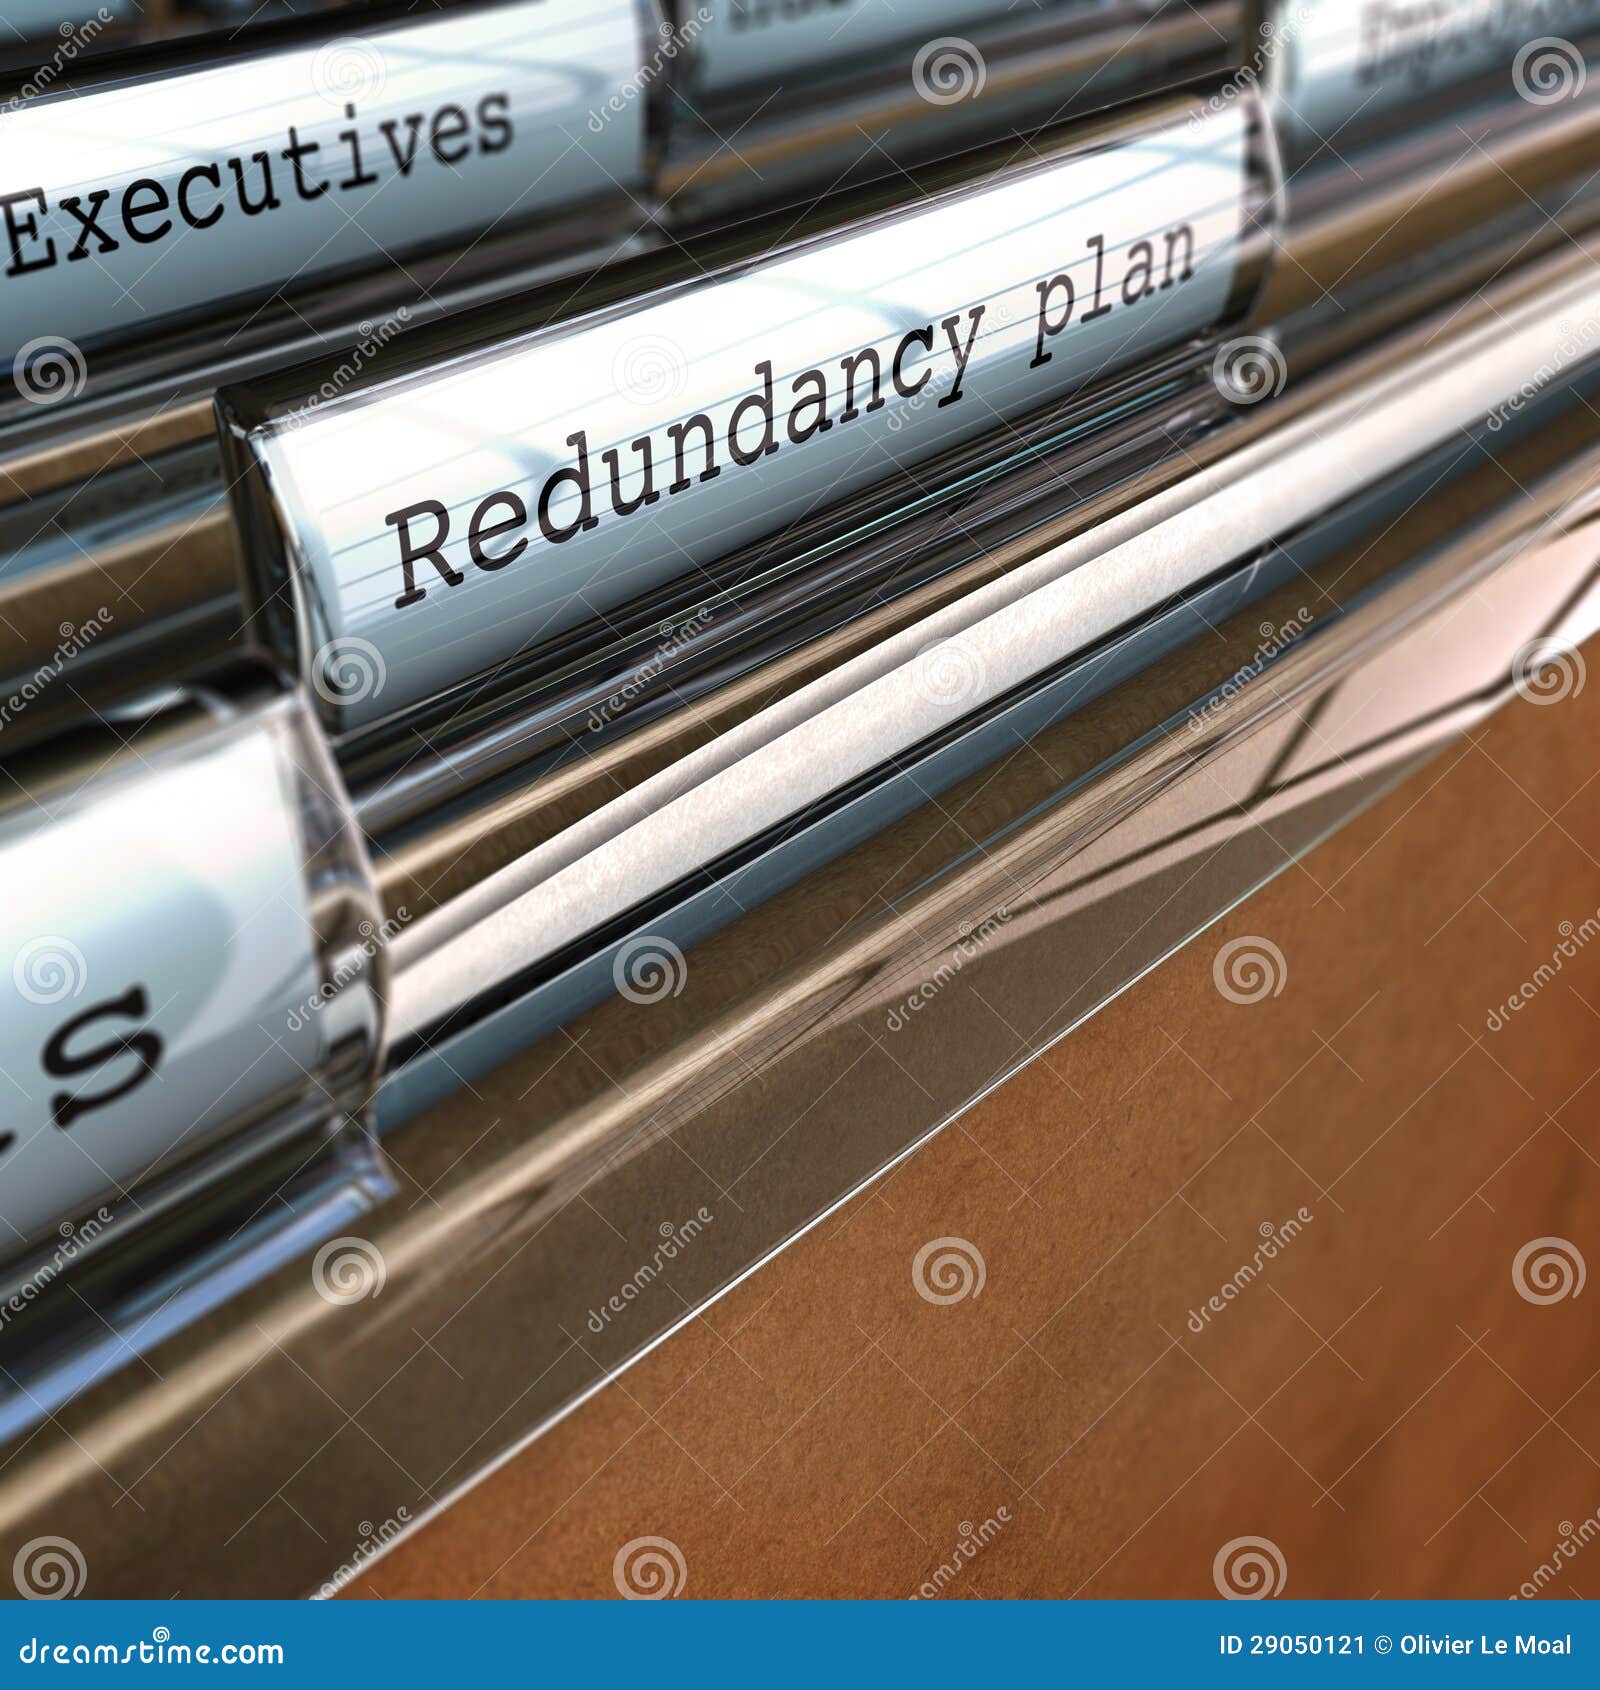 redundancy plan, restructuring a company